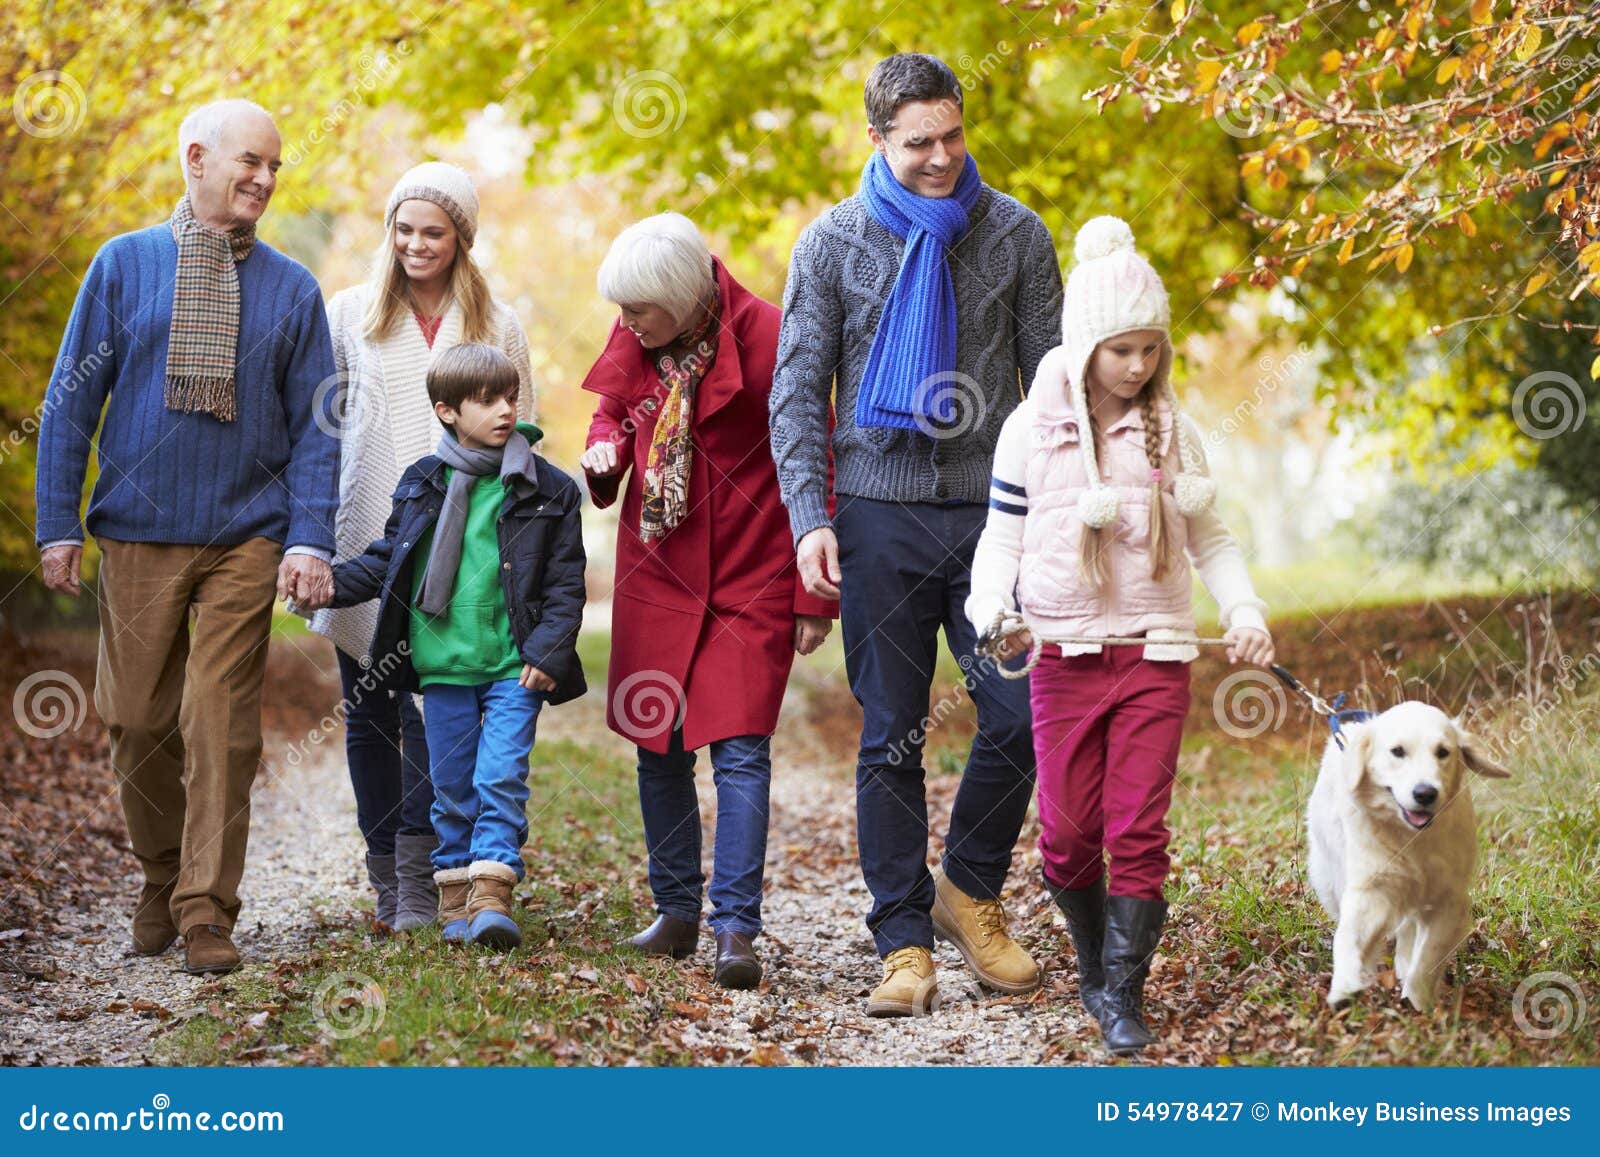 multl generation family walking along autumn path with dog